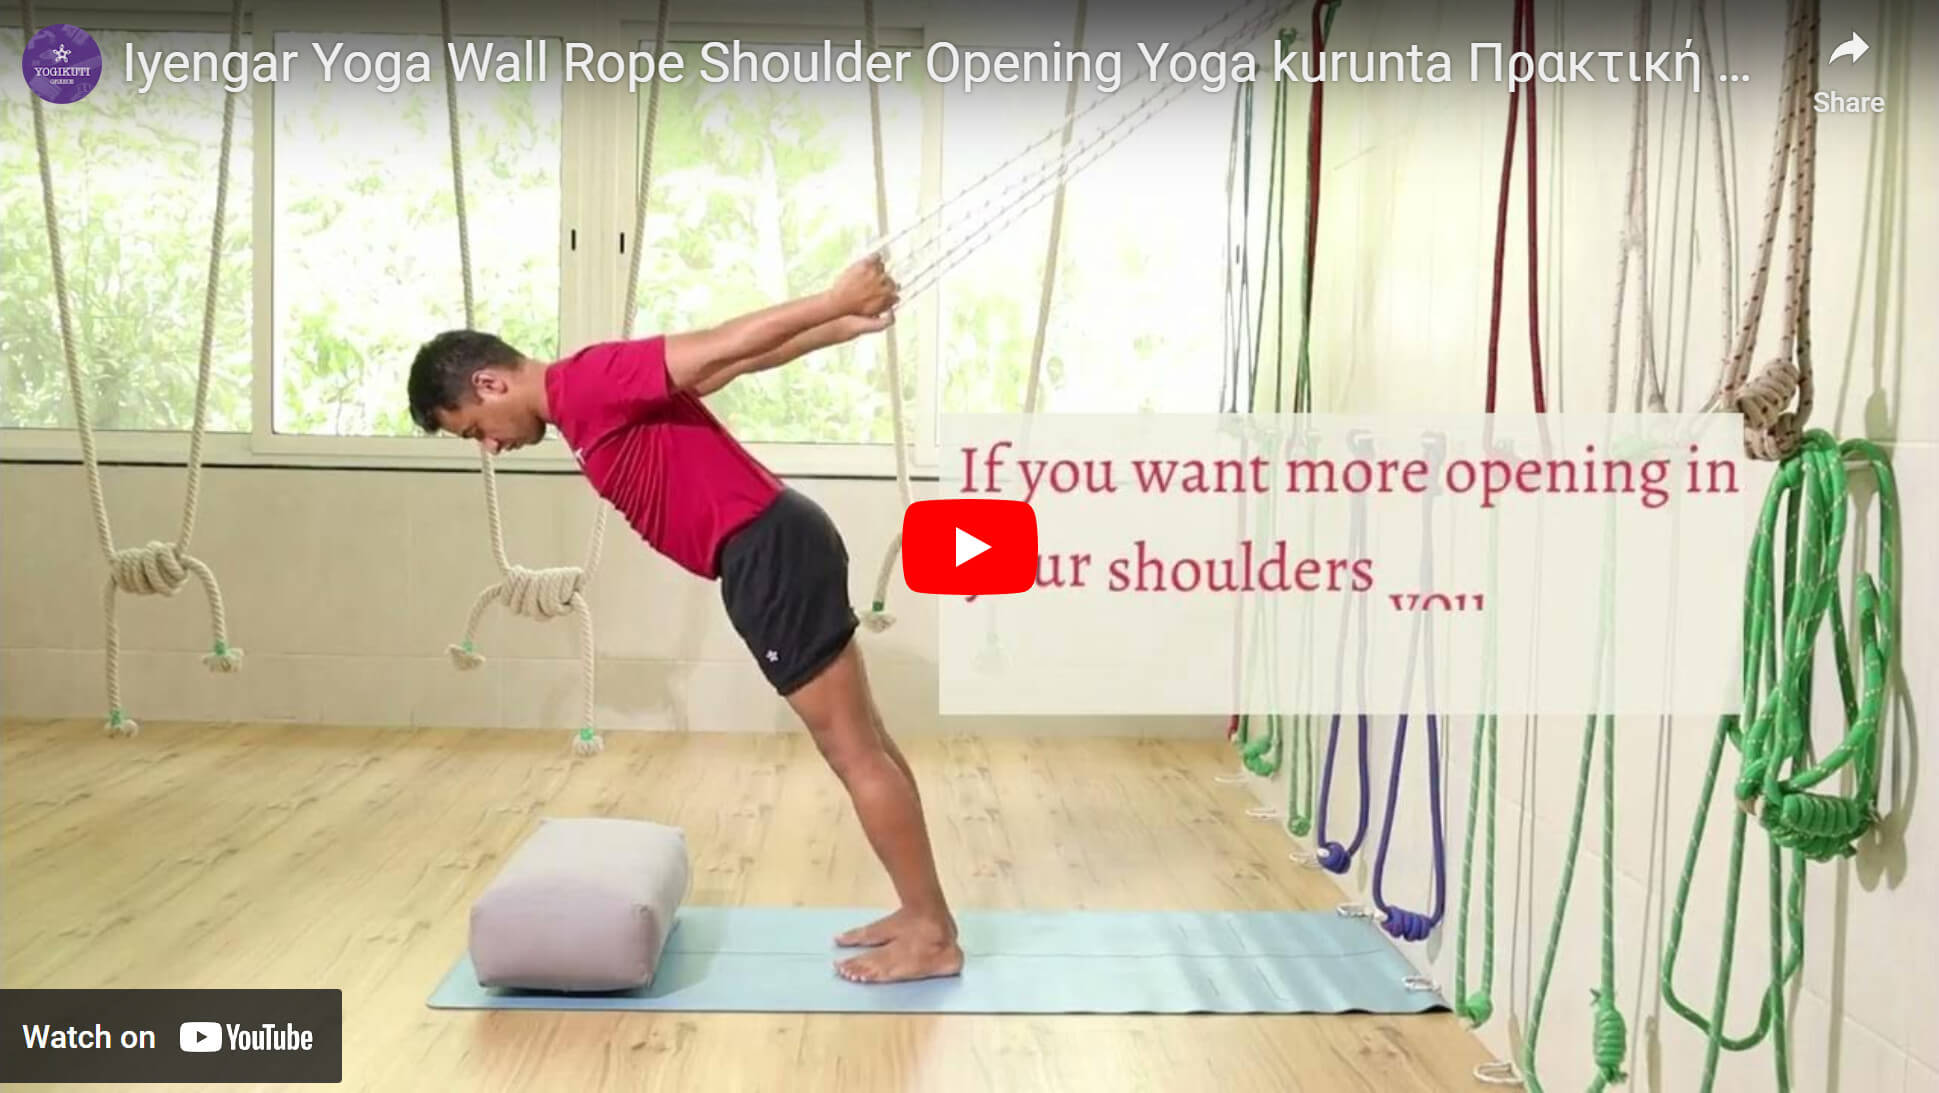 Iyengar Yoga wall rope shoulder opening yoga kurunta